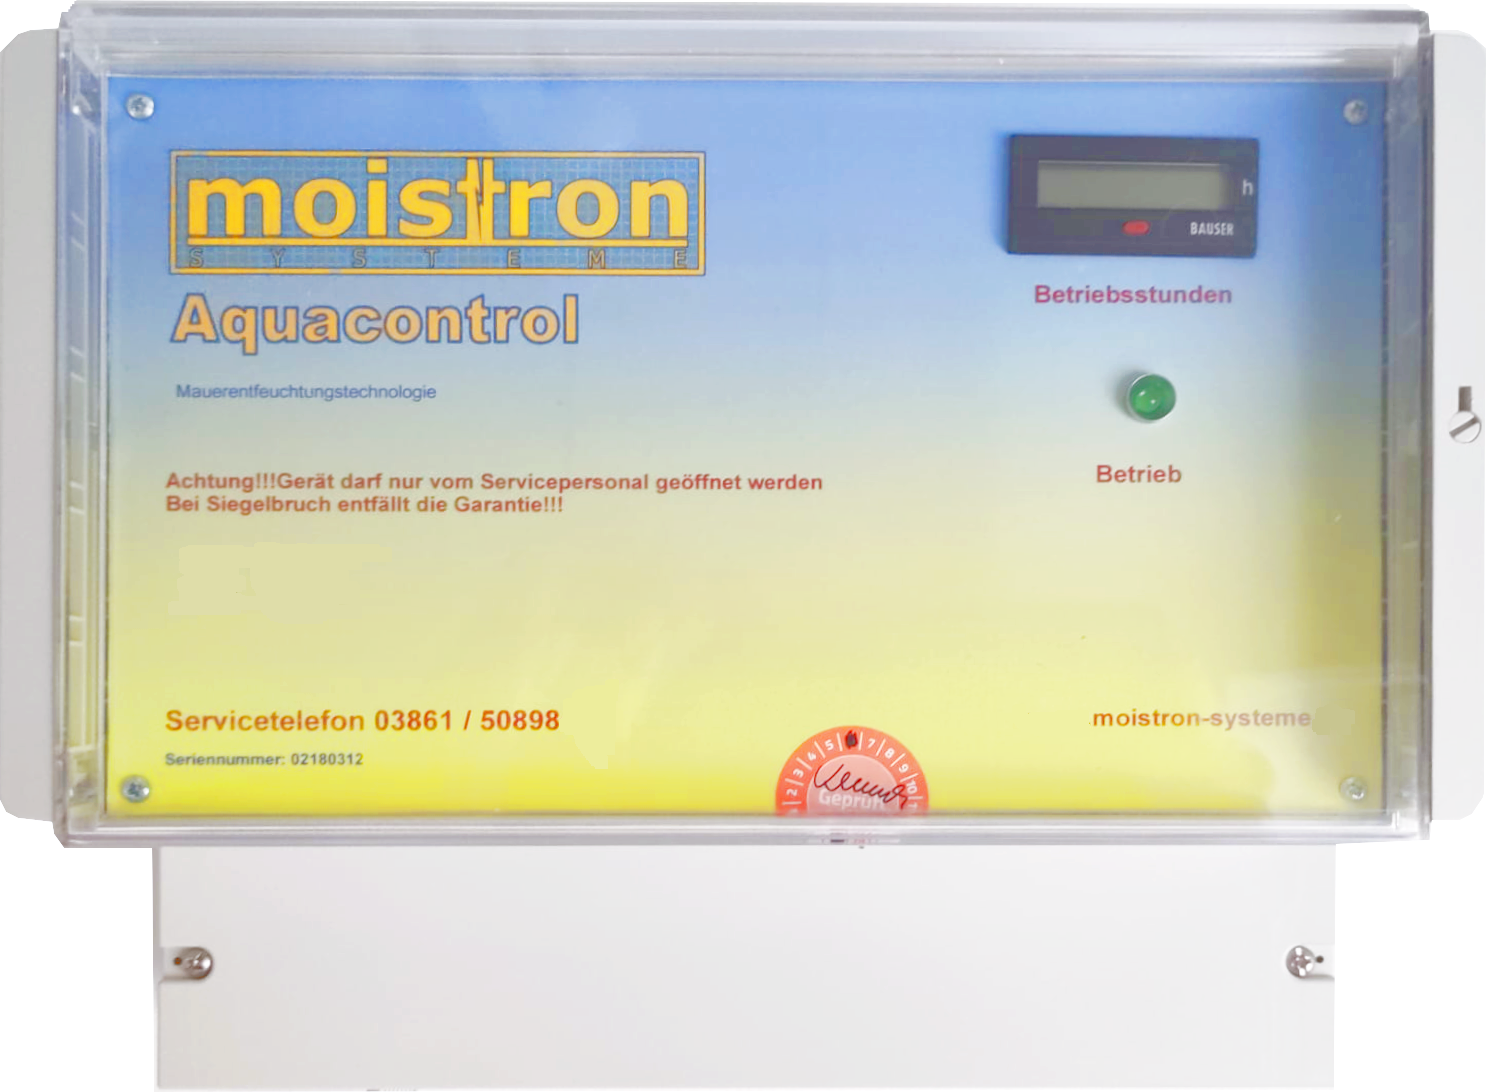 Moistron Aquacontrol 102